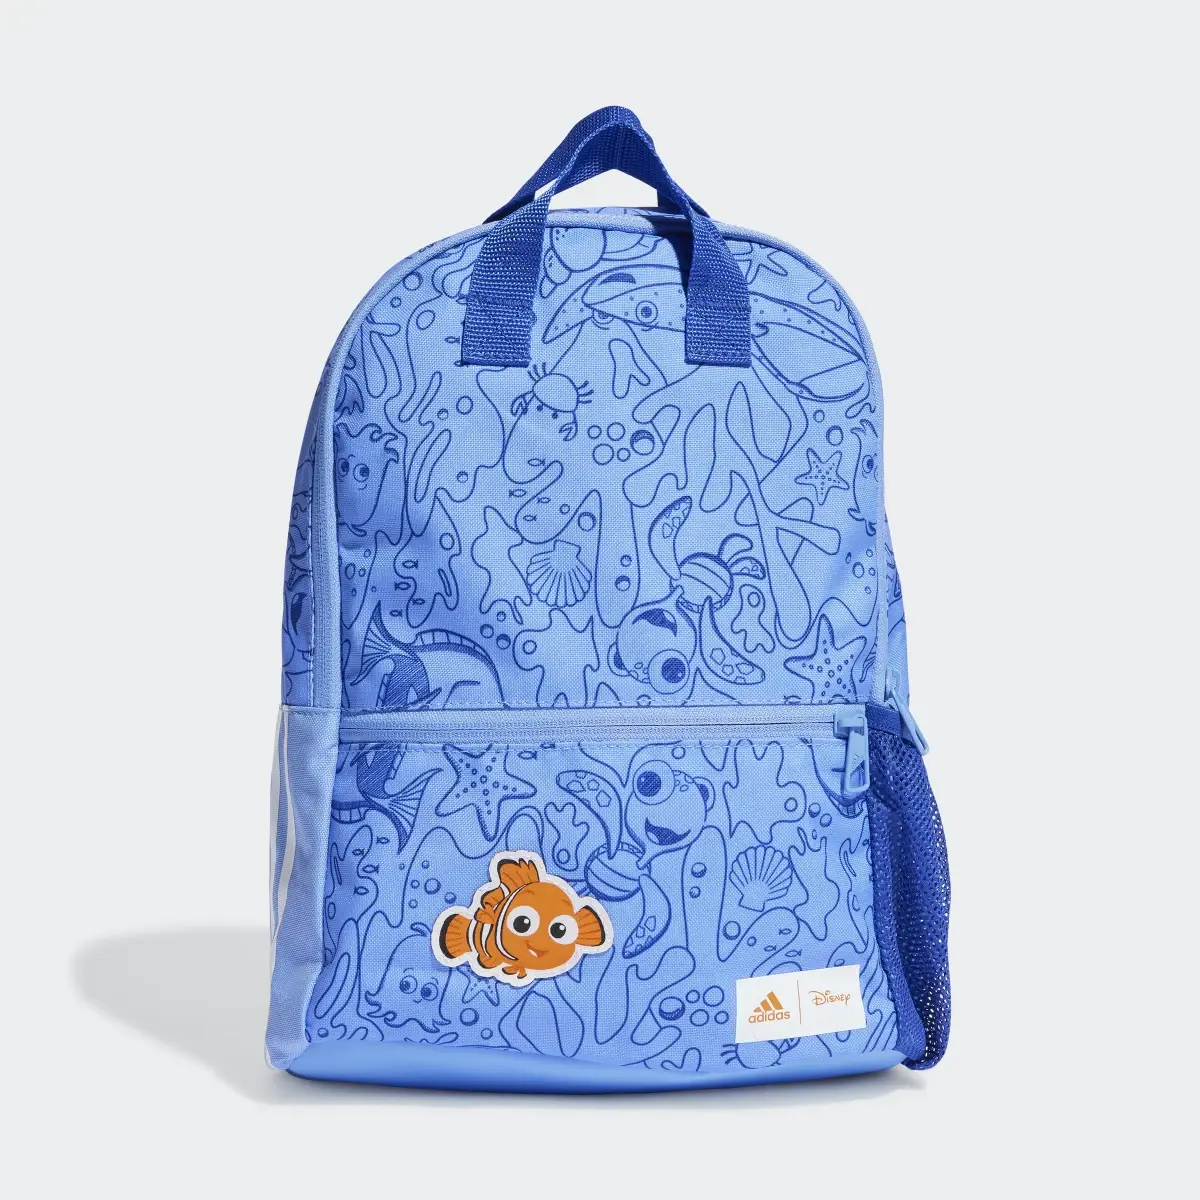 Adidas x Disney Pixar Finding Nemo Backpack. 2